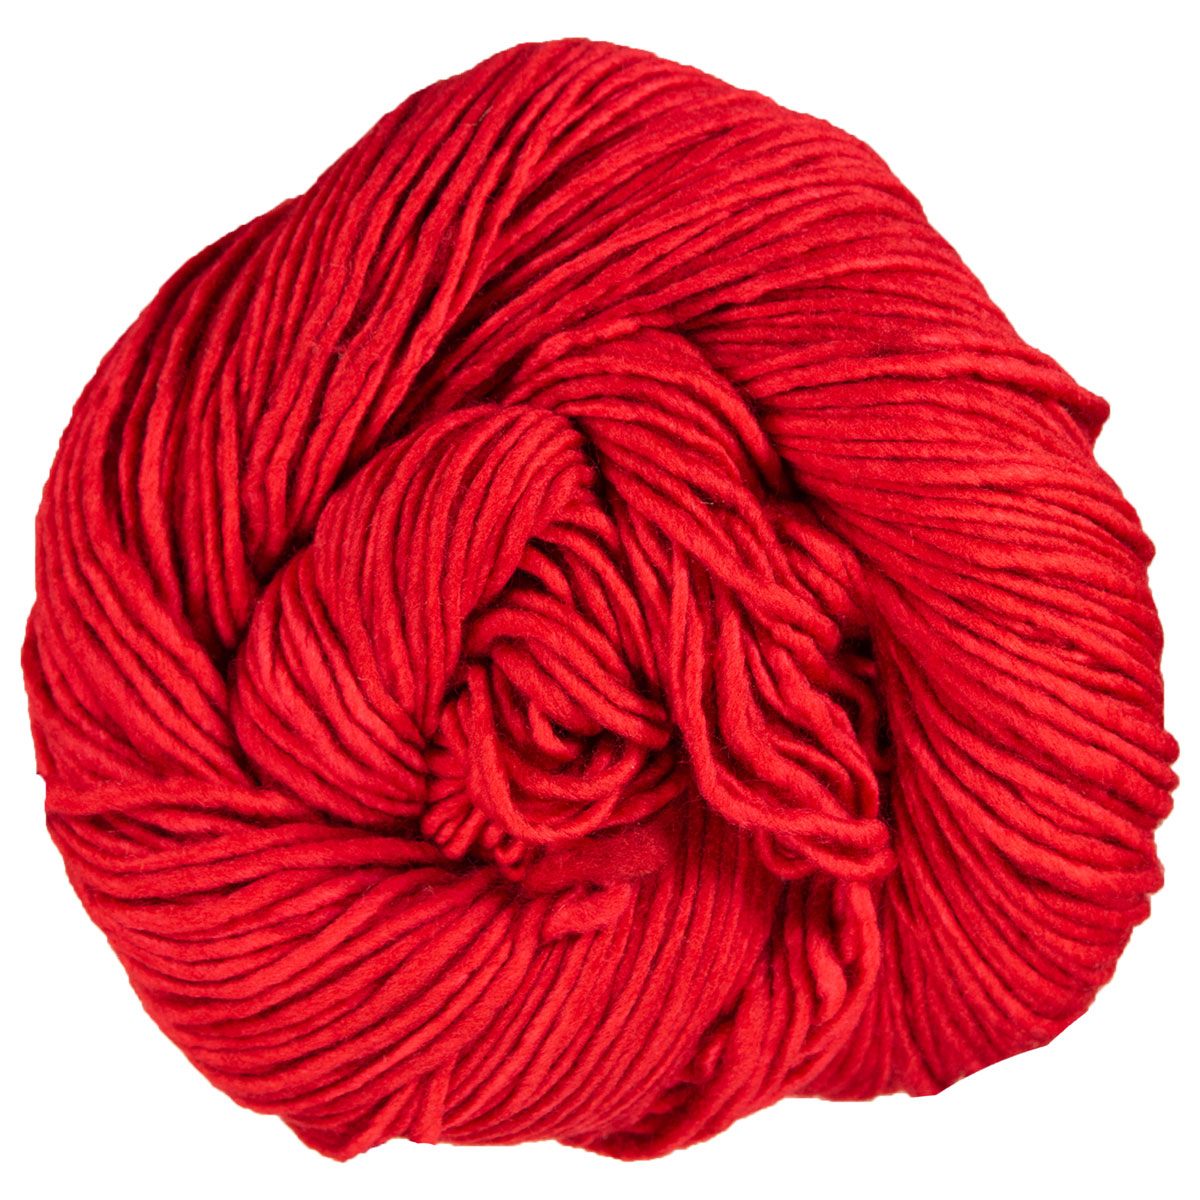 Malabrigo Worsted Merino Yarn - 611 Ravelry Red at Jimmy Beans Wool